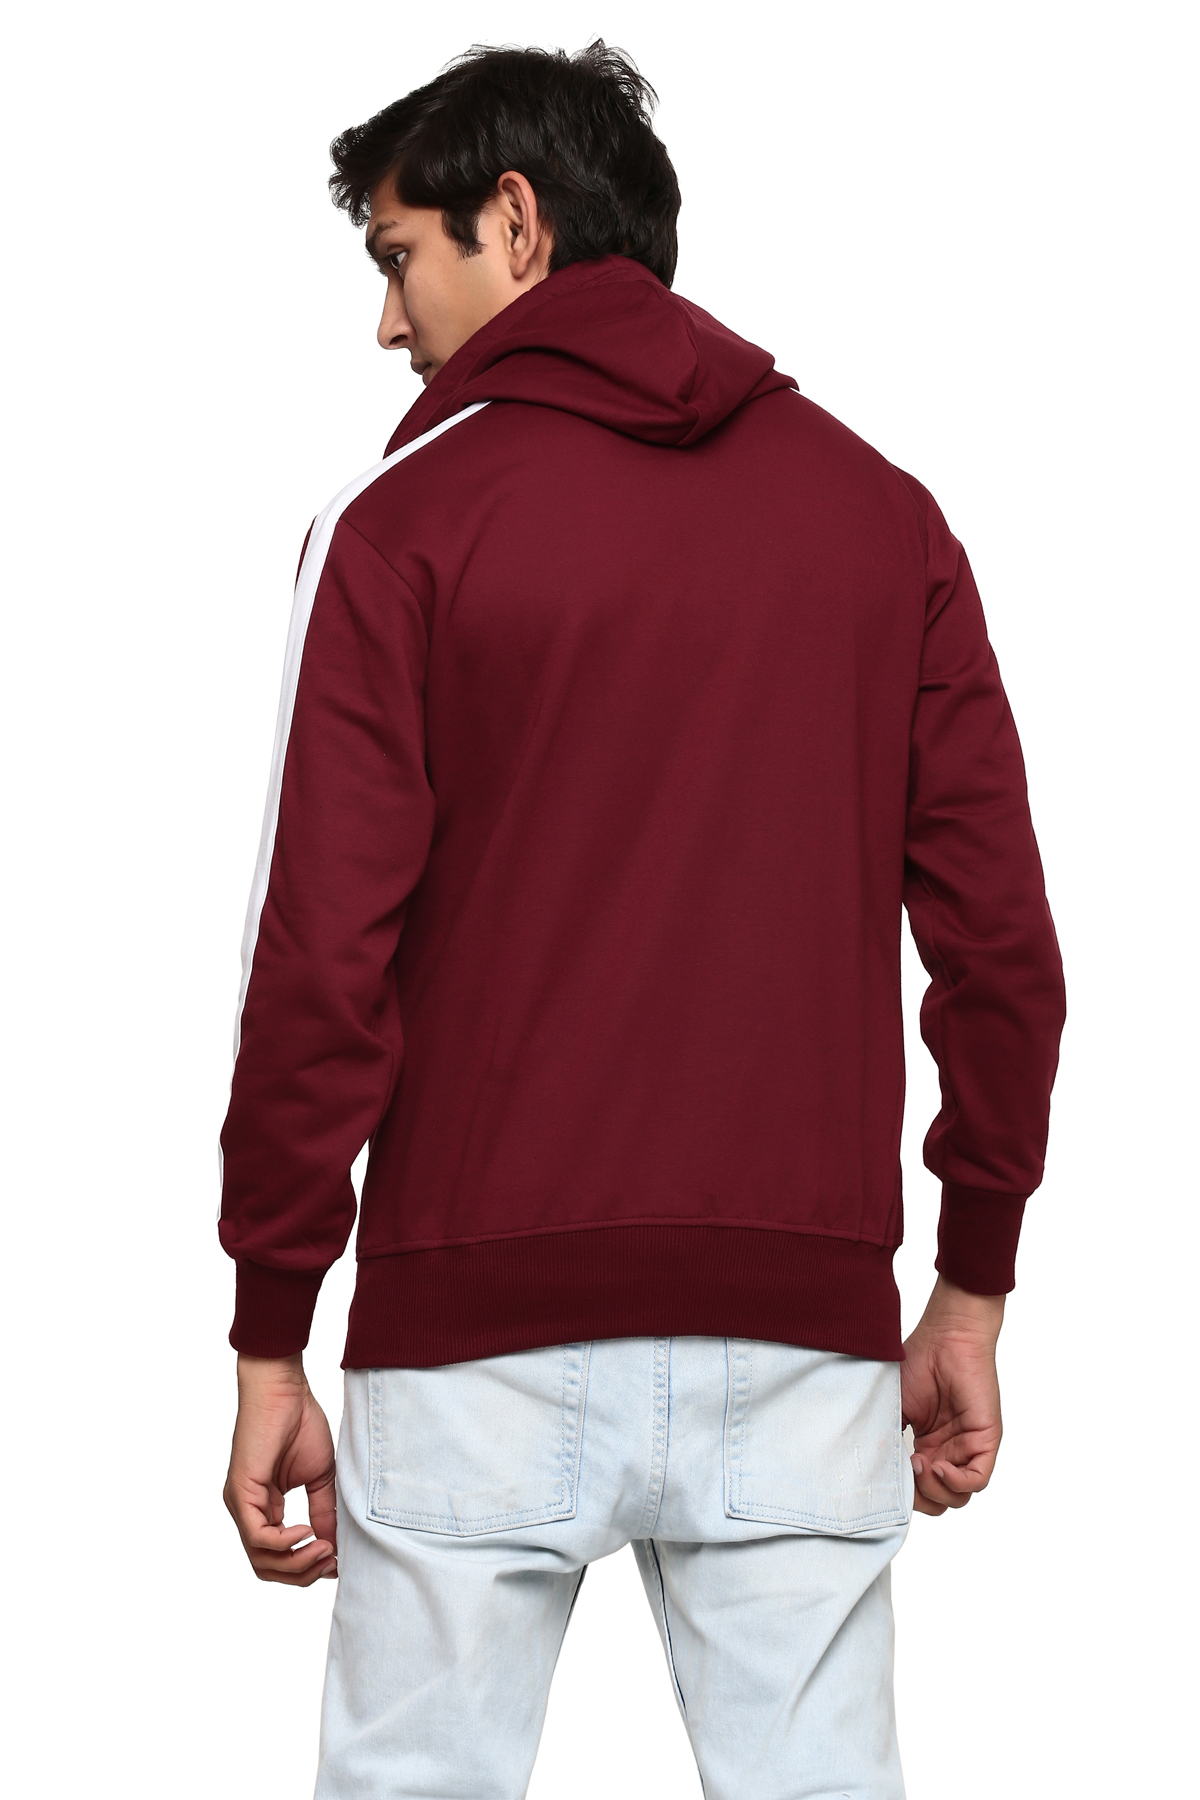 Buy Gentino Men's Stylish Plain Hooded Maroon Sweatshirt Online @ ₹649 ...